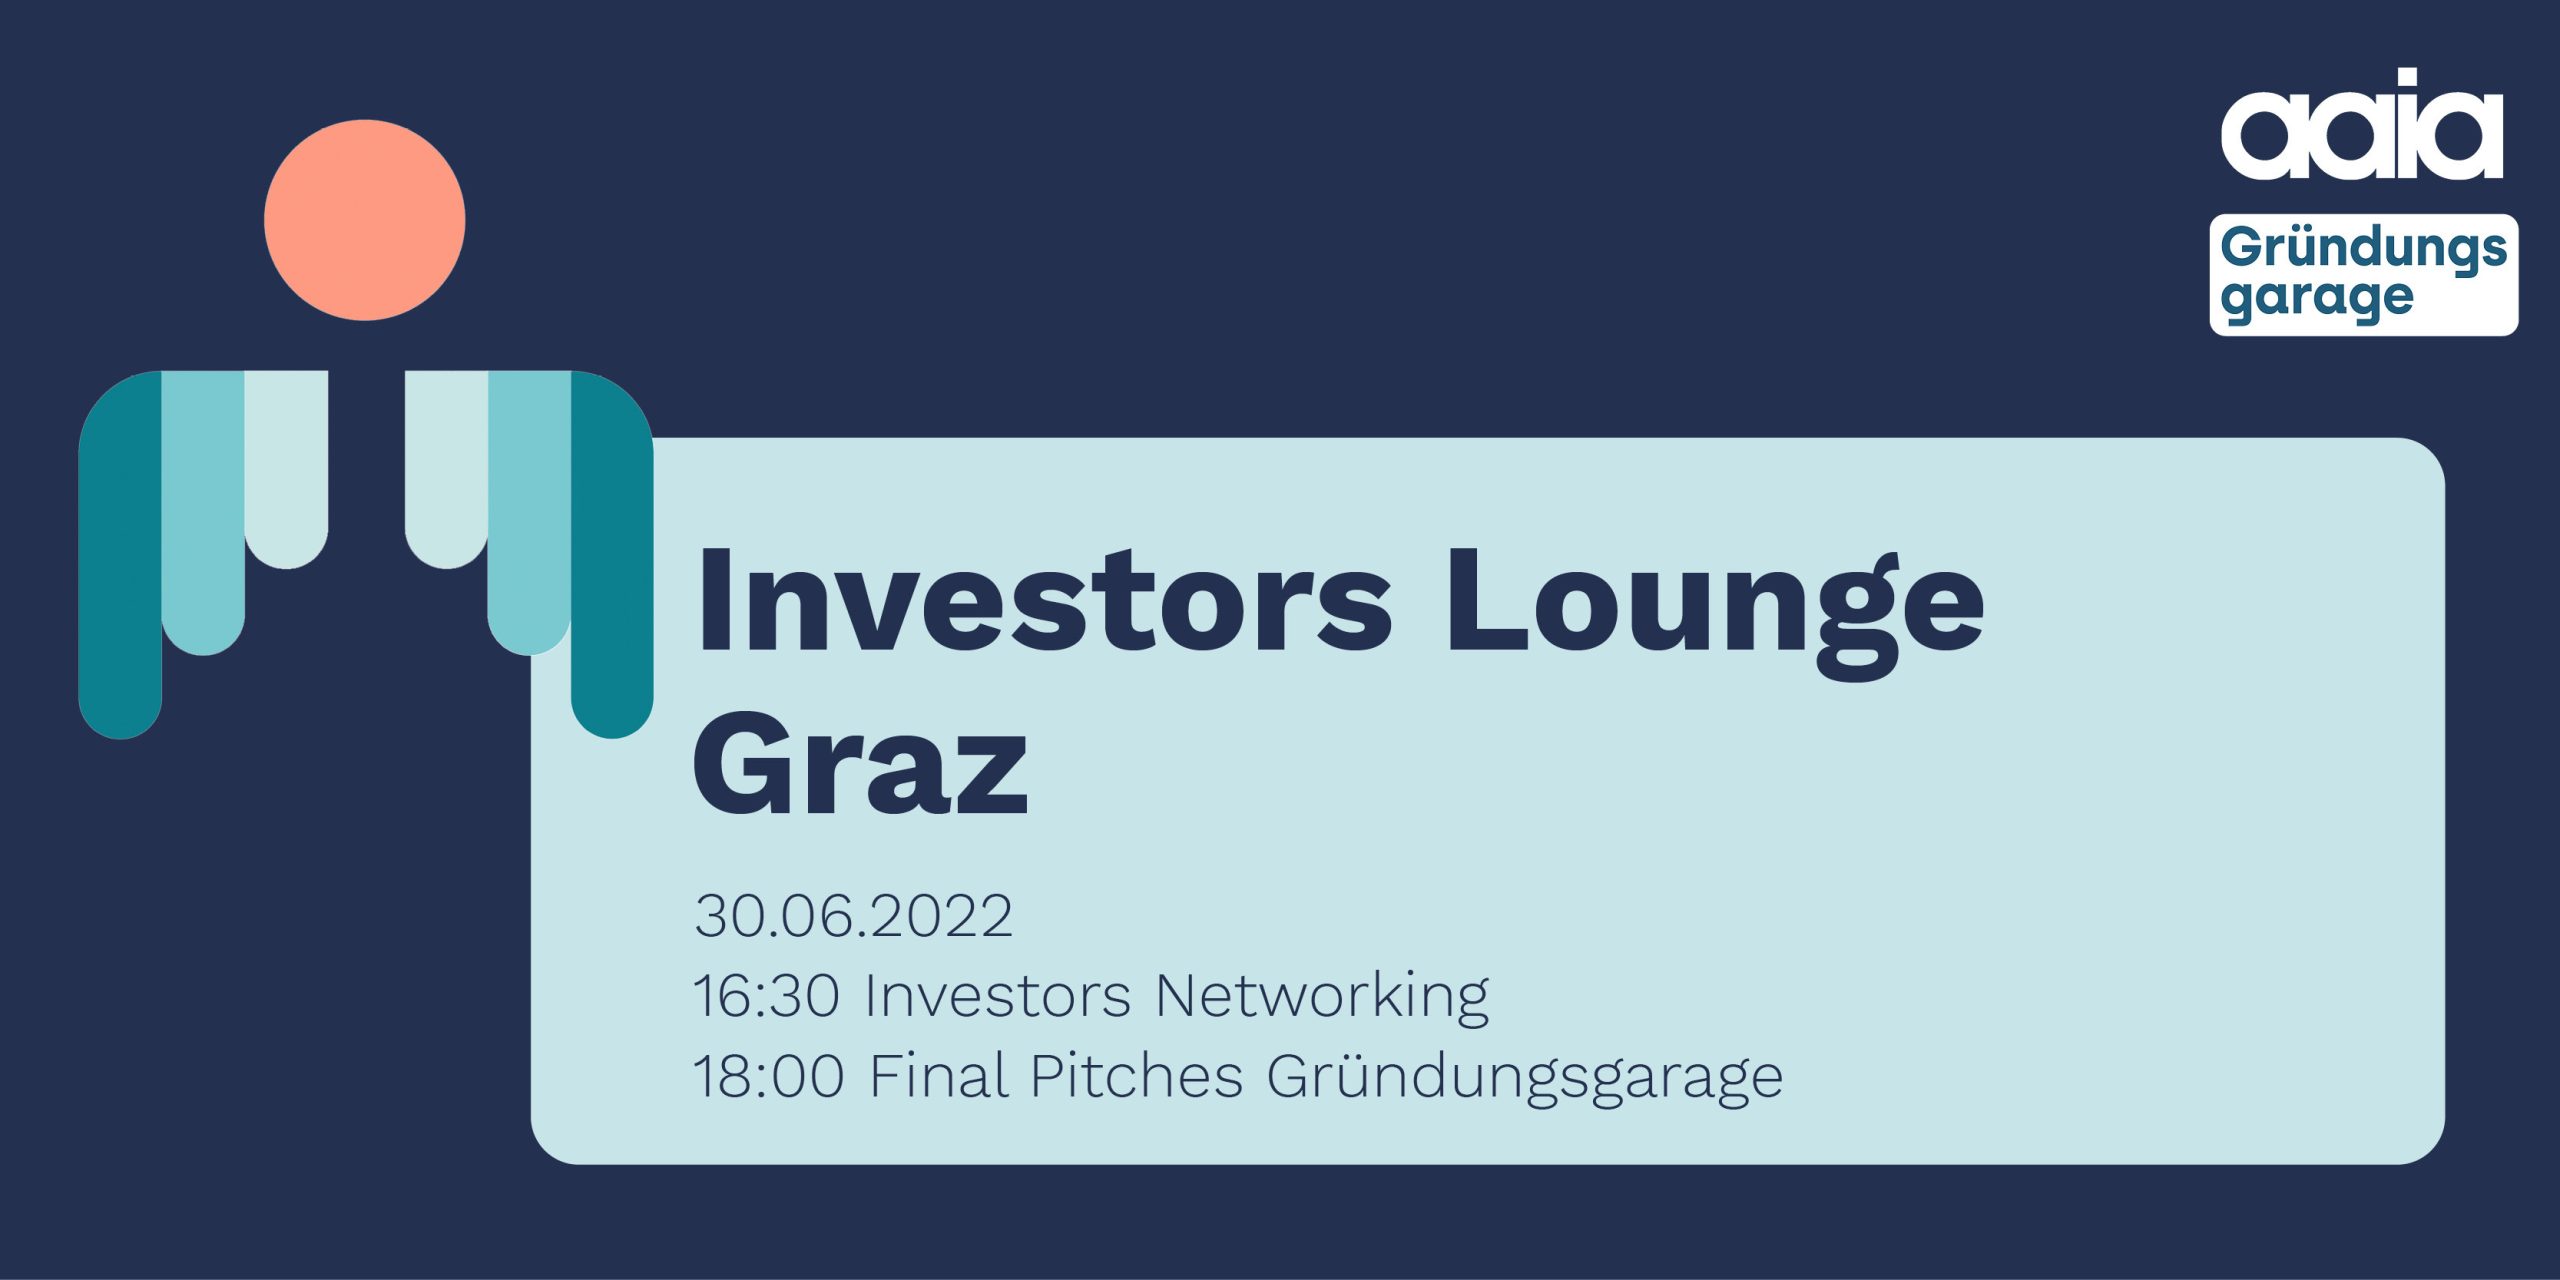 Investors Lounge Graz